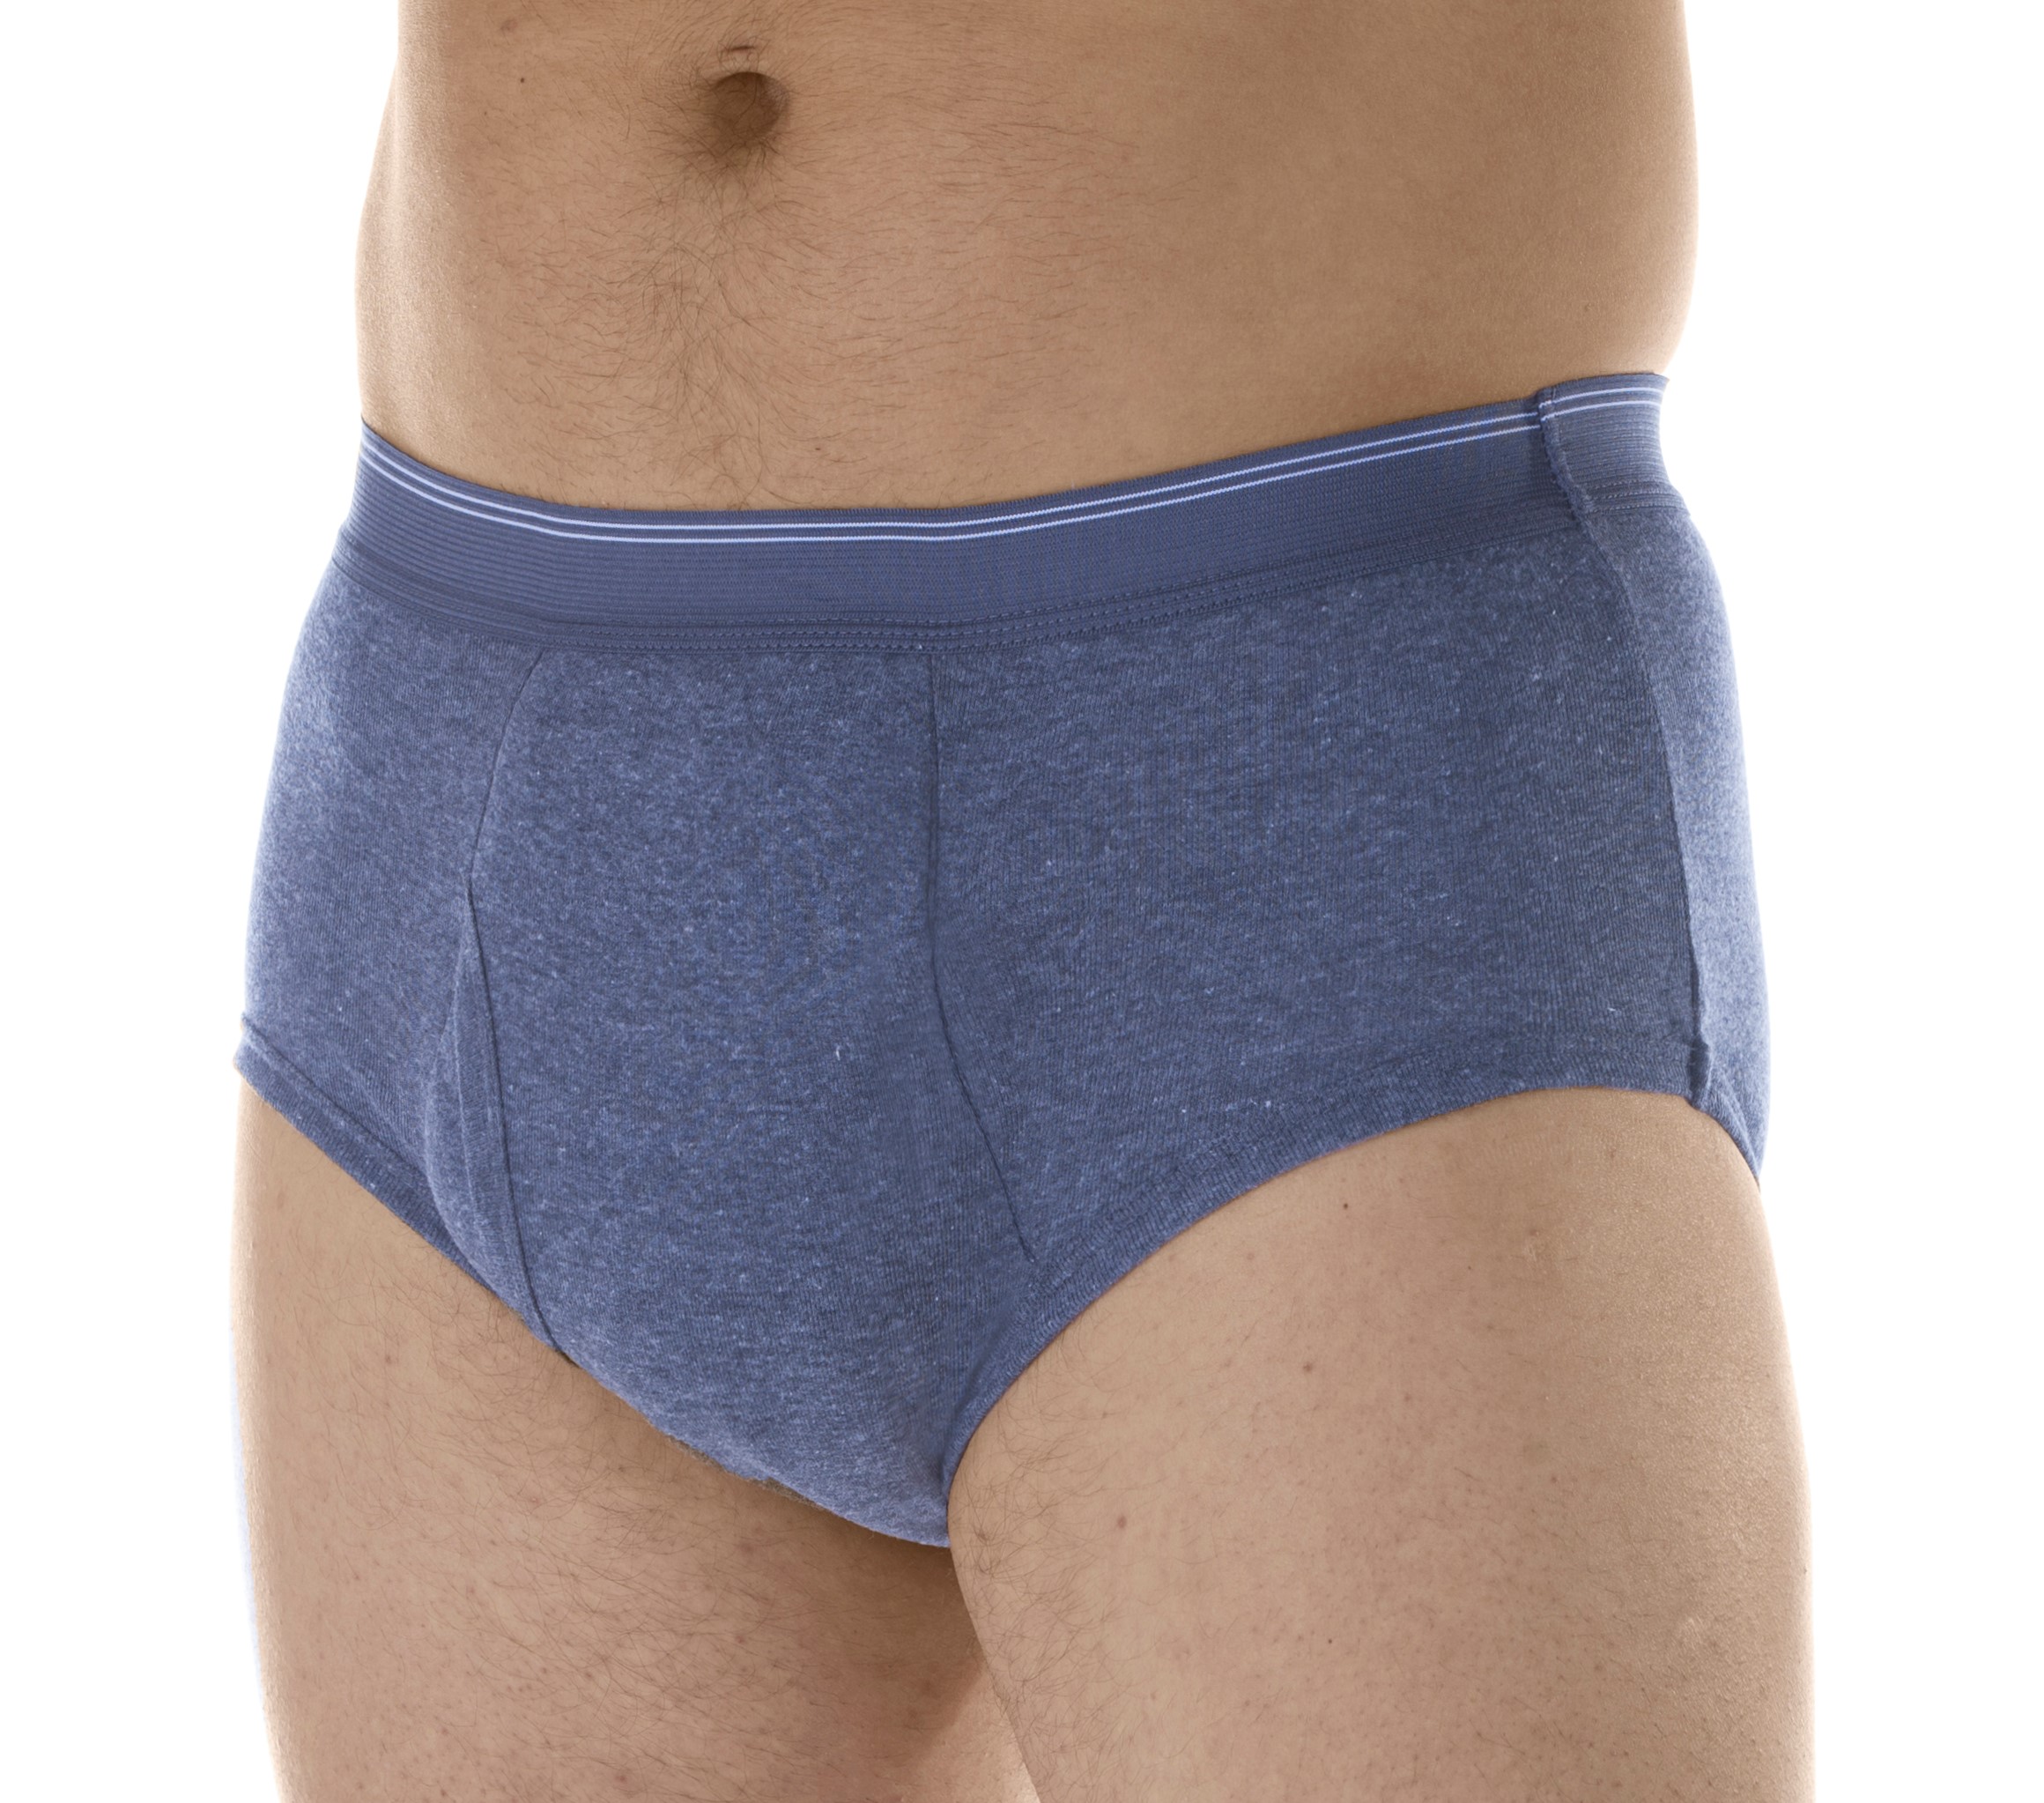 Men Adult Waterproof Underwear,high Quality 100%cotton Incontinence  Underwear - Buy China Wholesale Waterproof Underwear $4.2